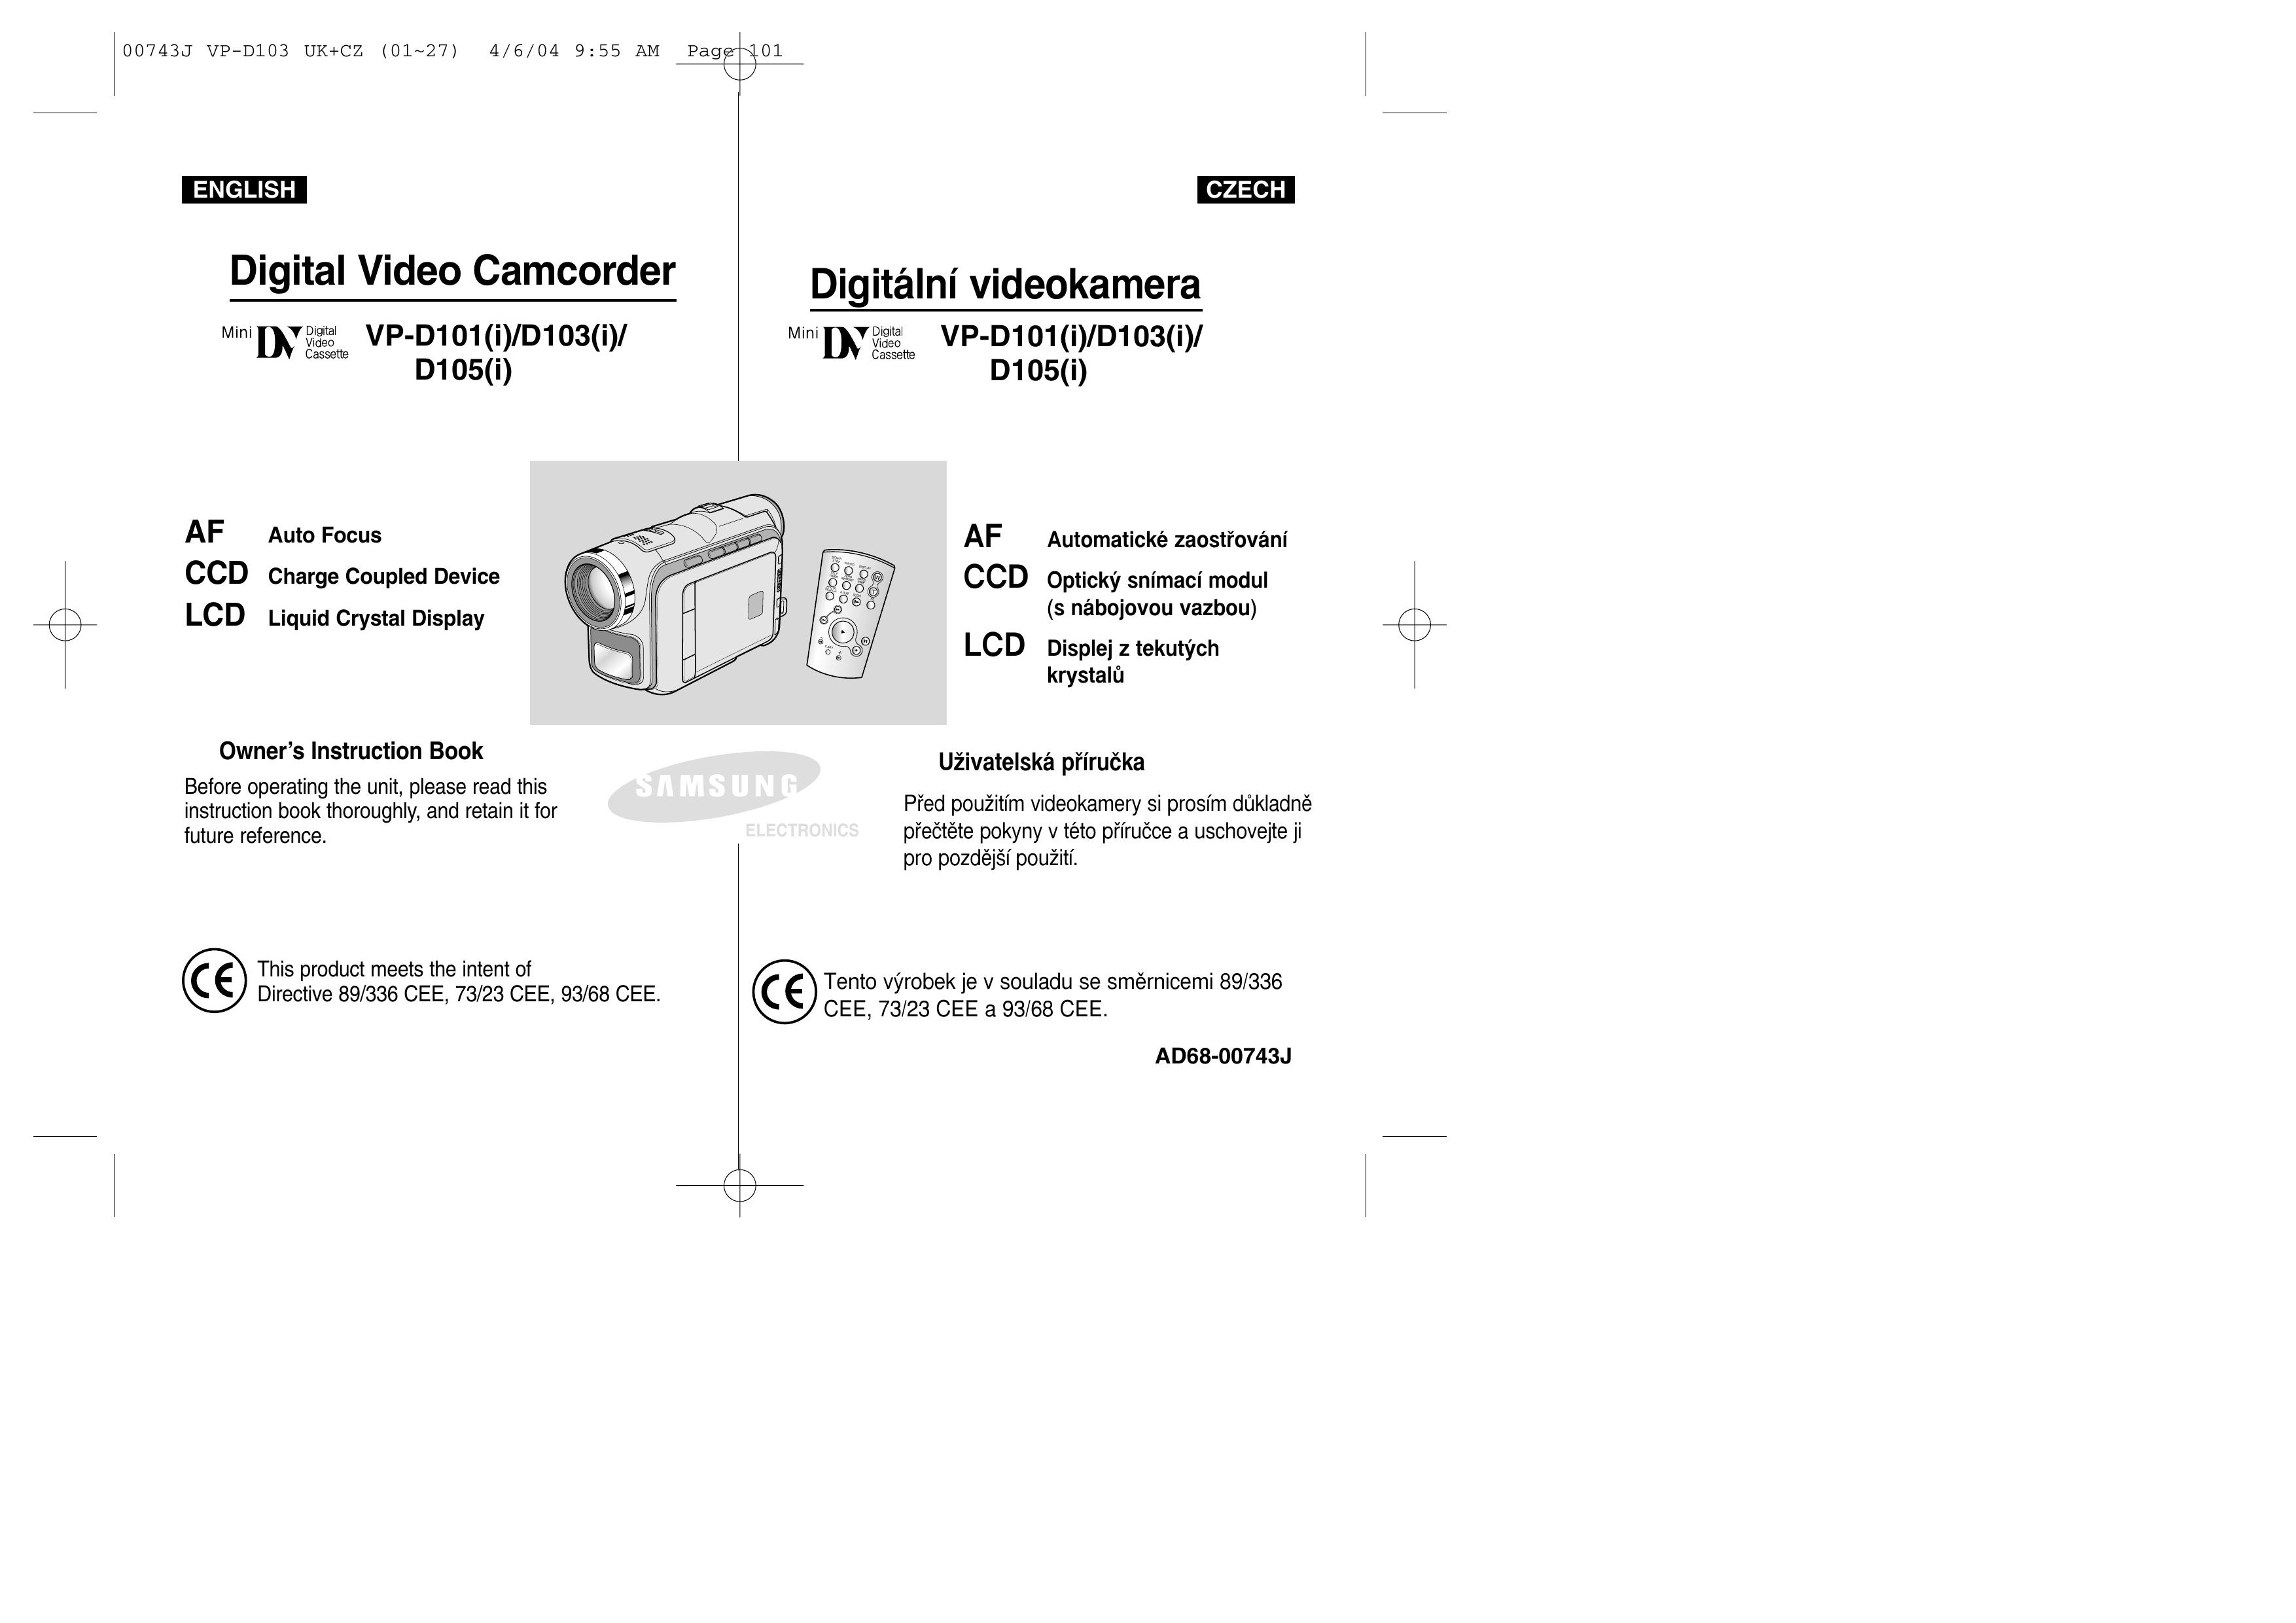 Samsung D105 Camcorder User Manual